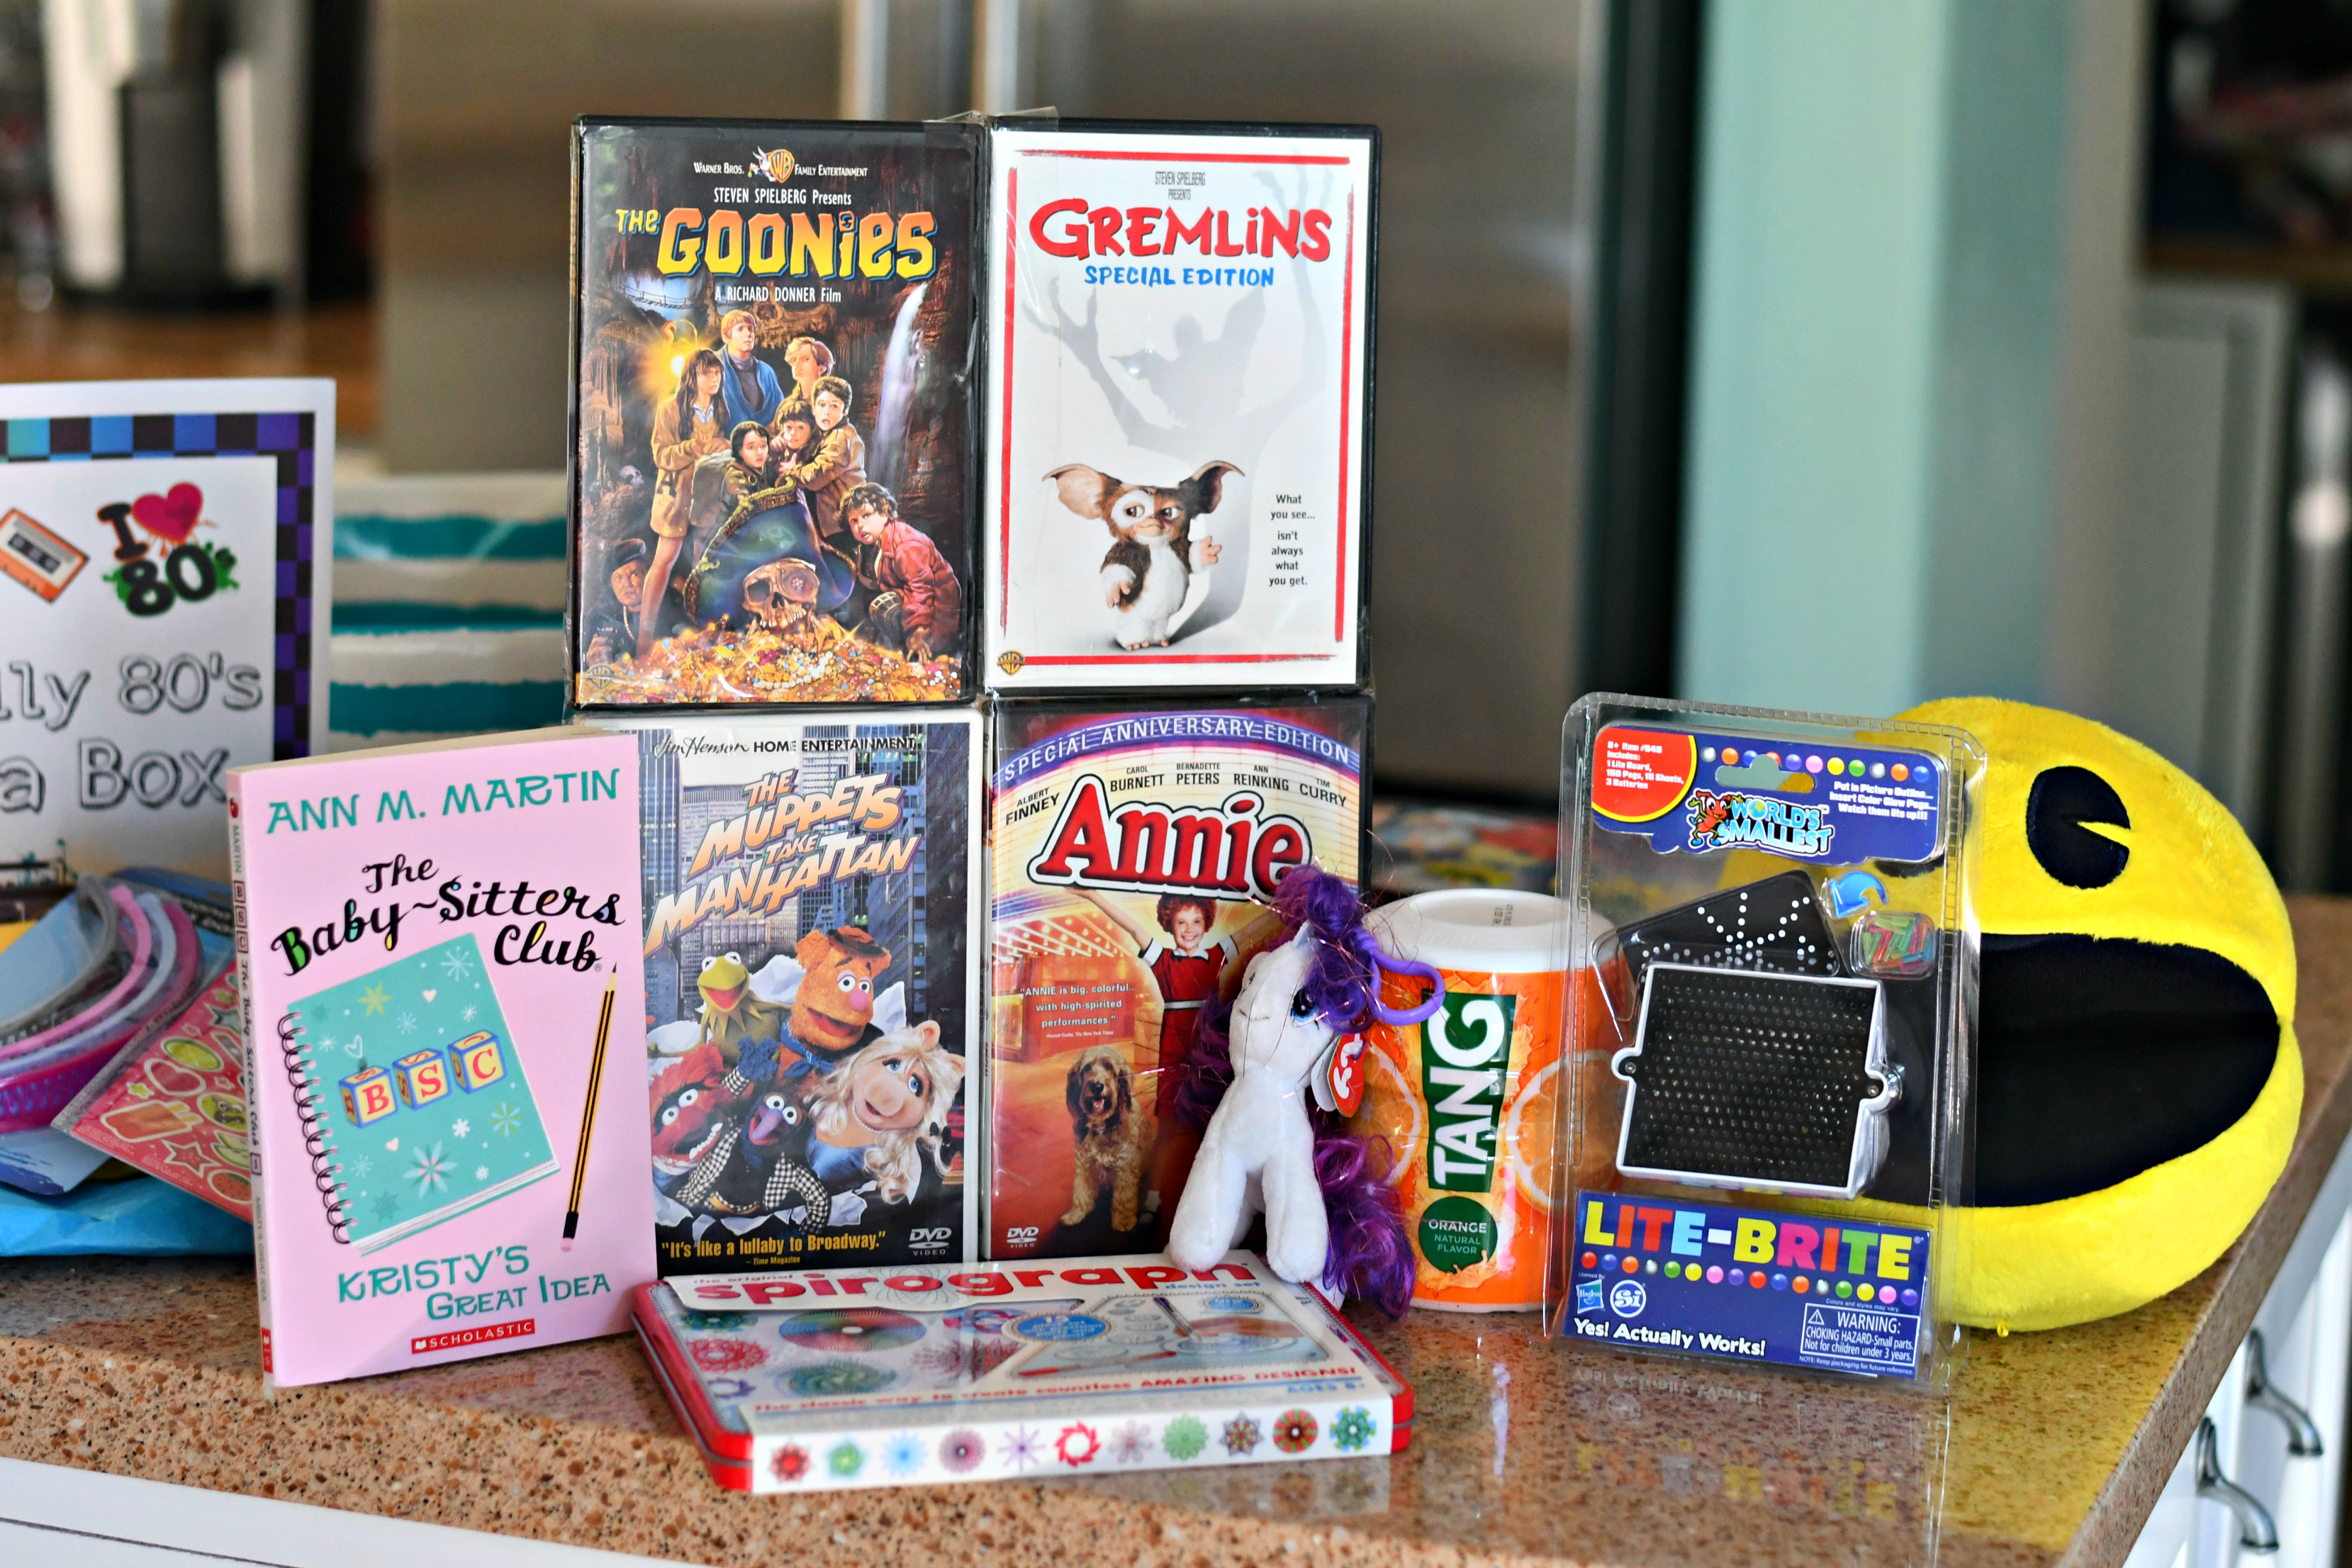 80s box gift idea – Goonies, Gremlins, Tang, and more